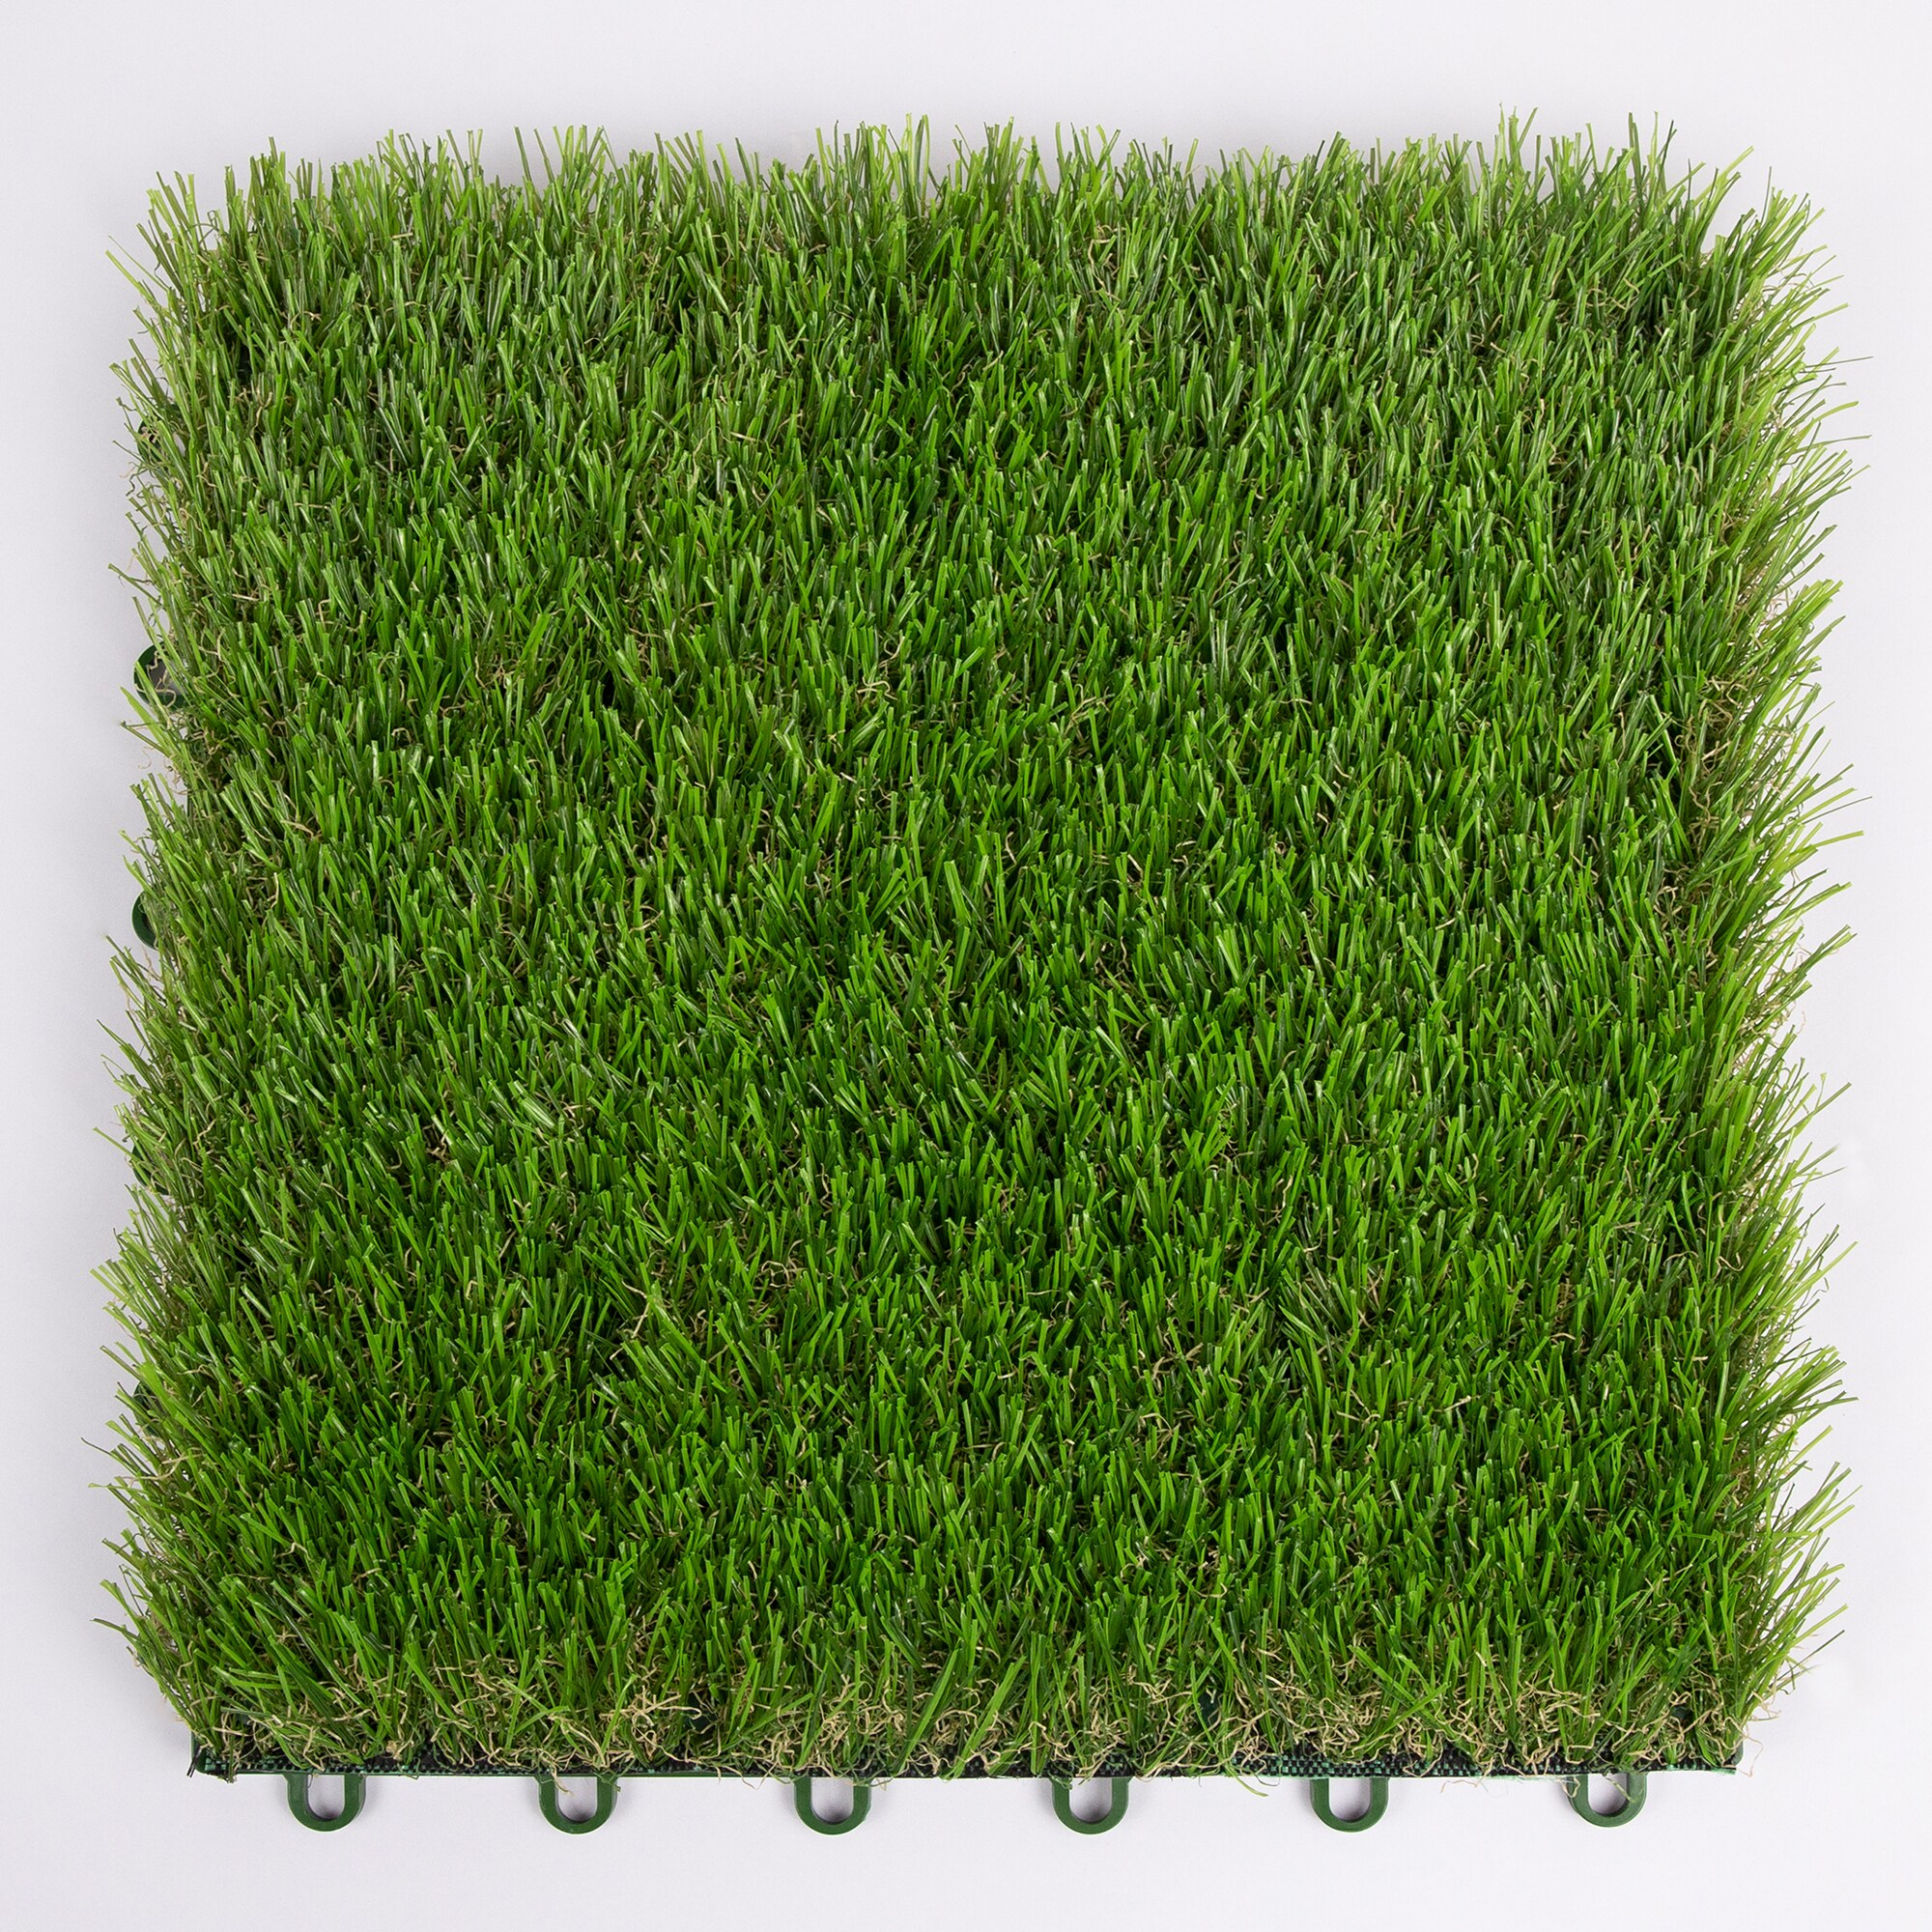 Artificial Grass Fake Lawn Turf Synthetic Plants Fake Lawn Garden Flooring Decor 